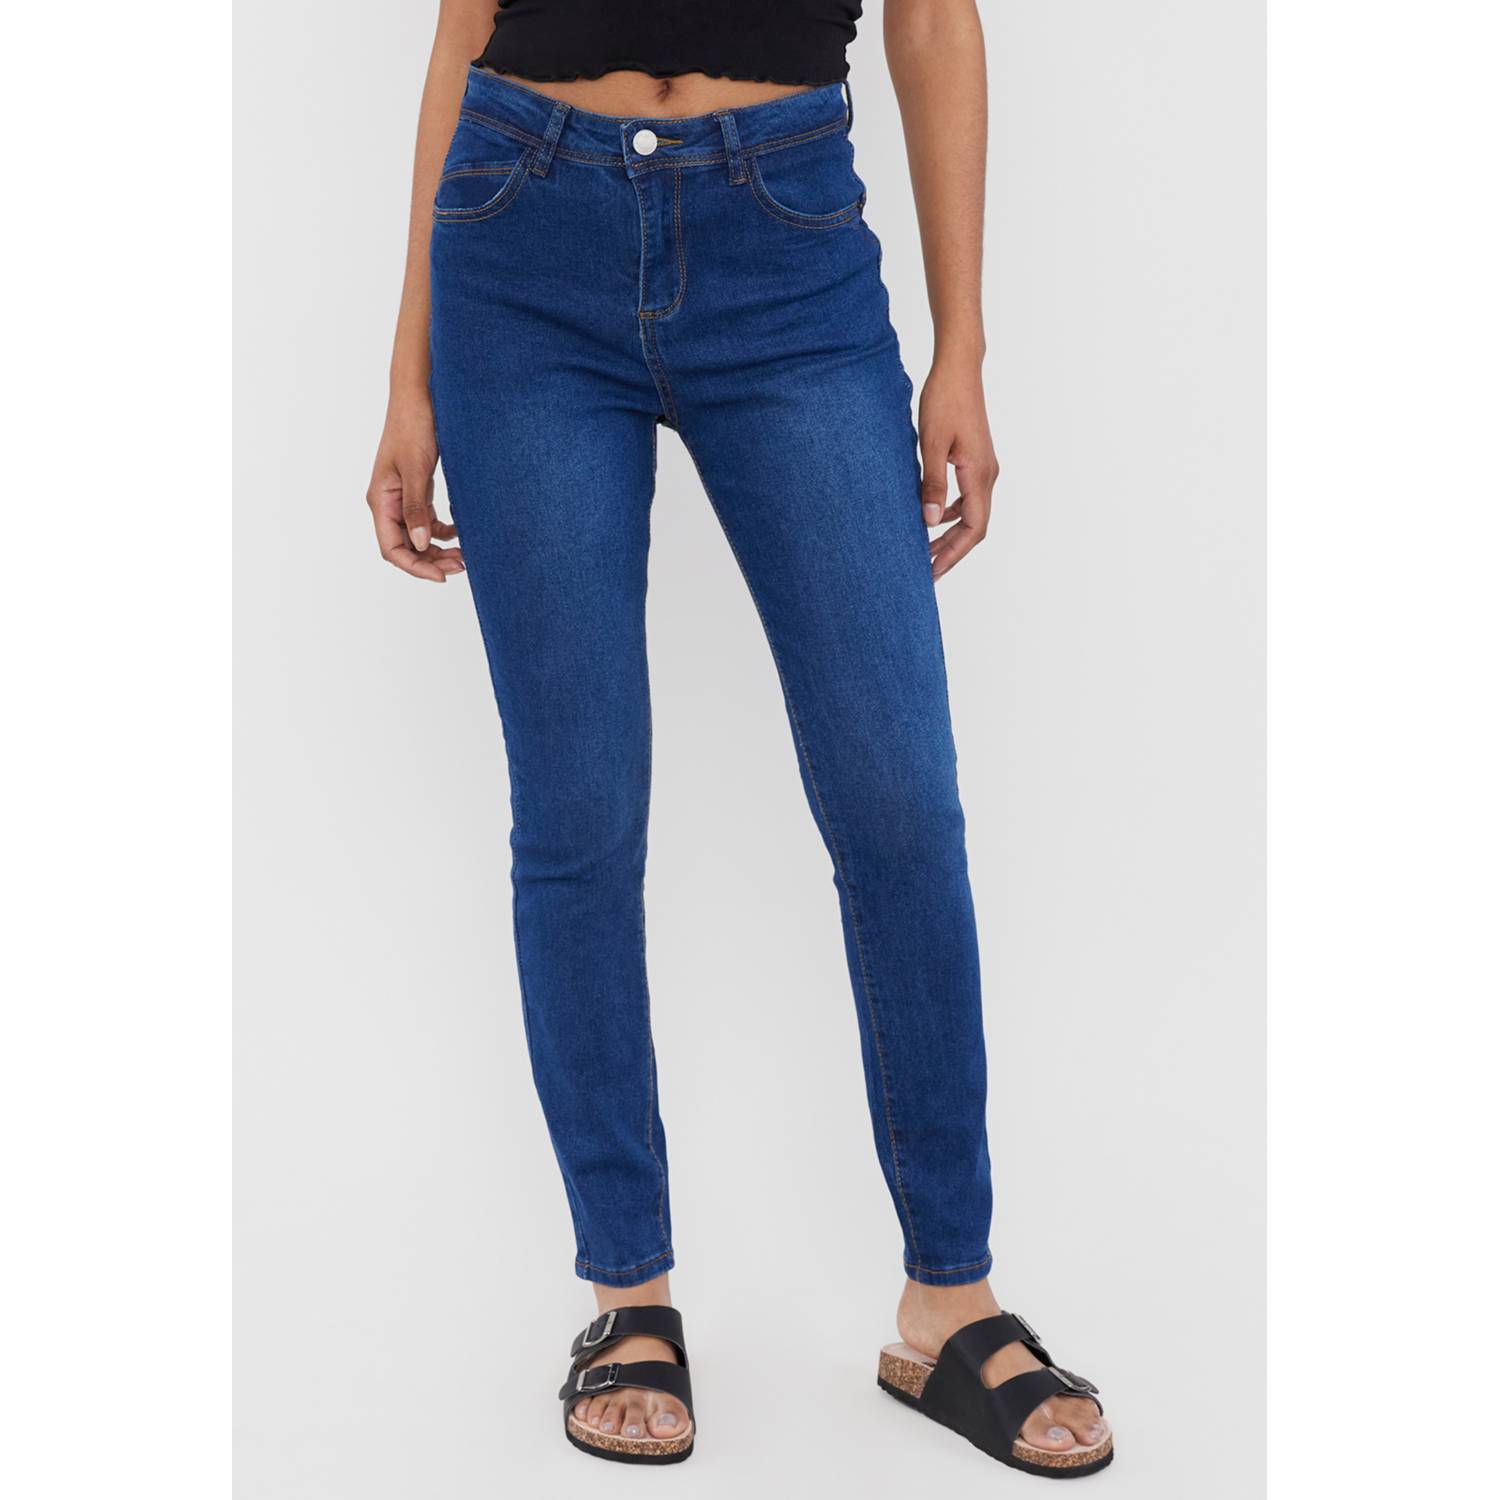 Queens jeans - Pantalón jean push up control abdomen pretina alta material  tipo strech piel durazno color azul oscuro stone para dama disponible desde  talla 6 hasta 16. . . . . #